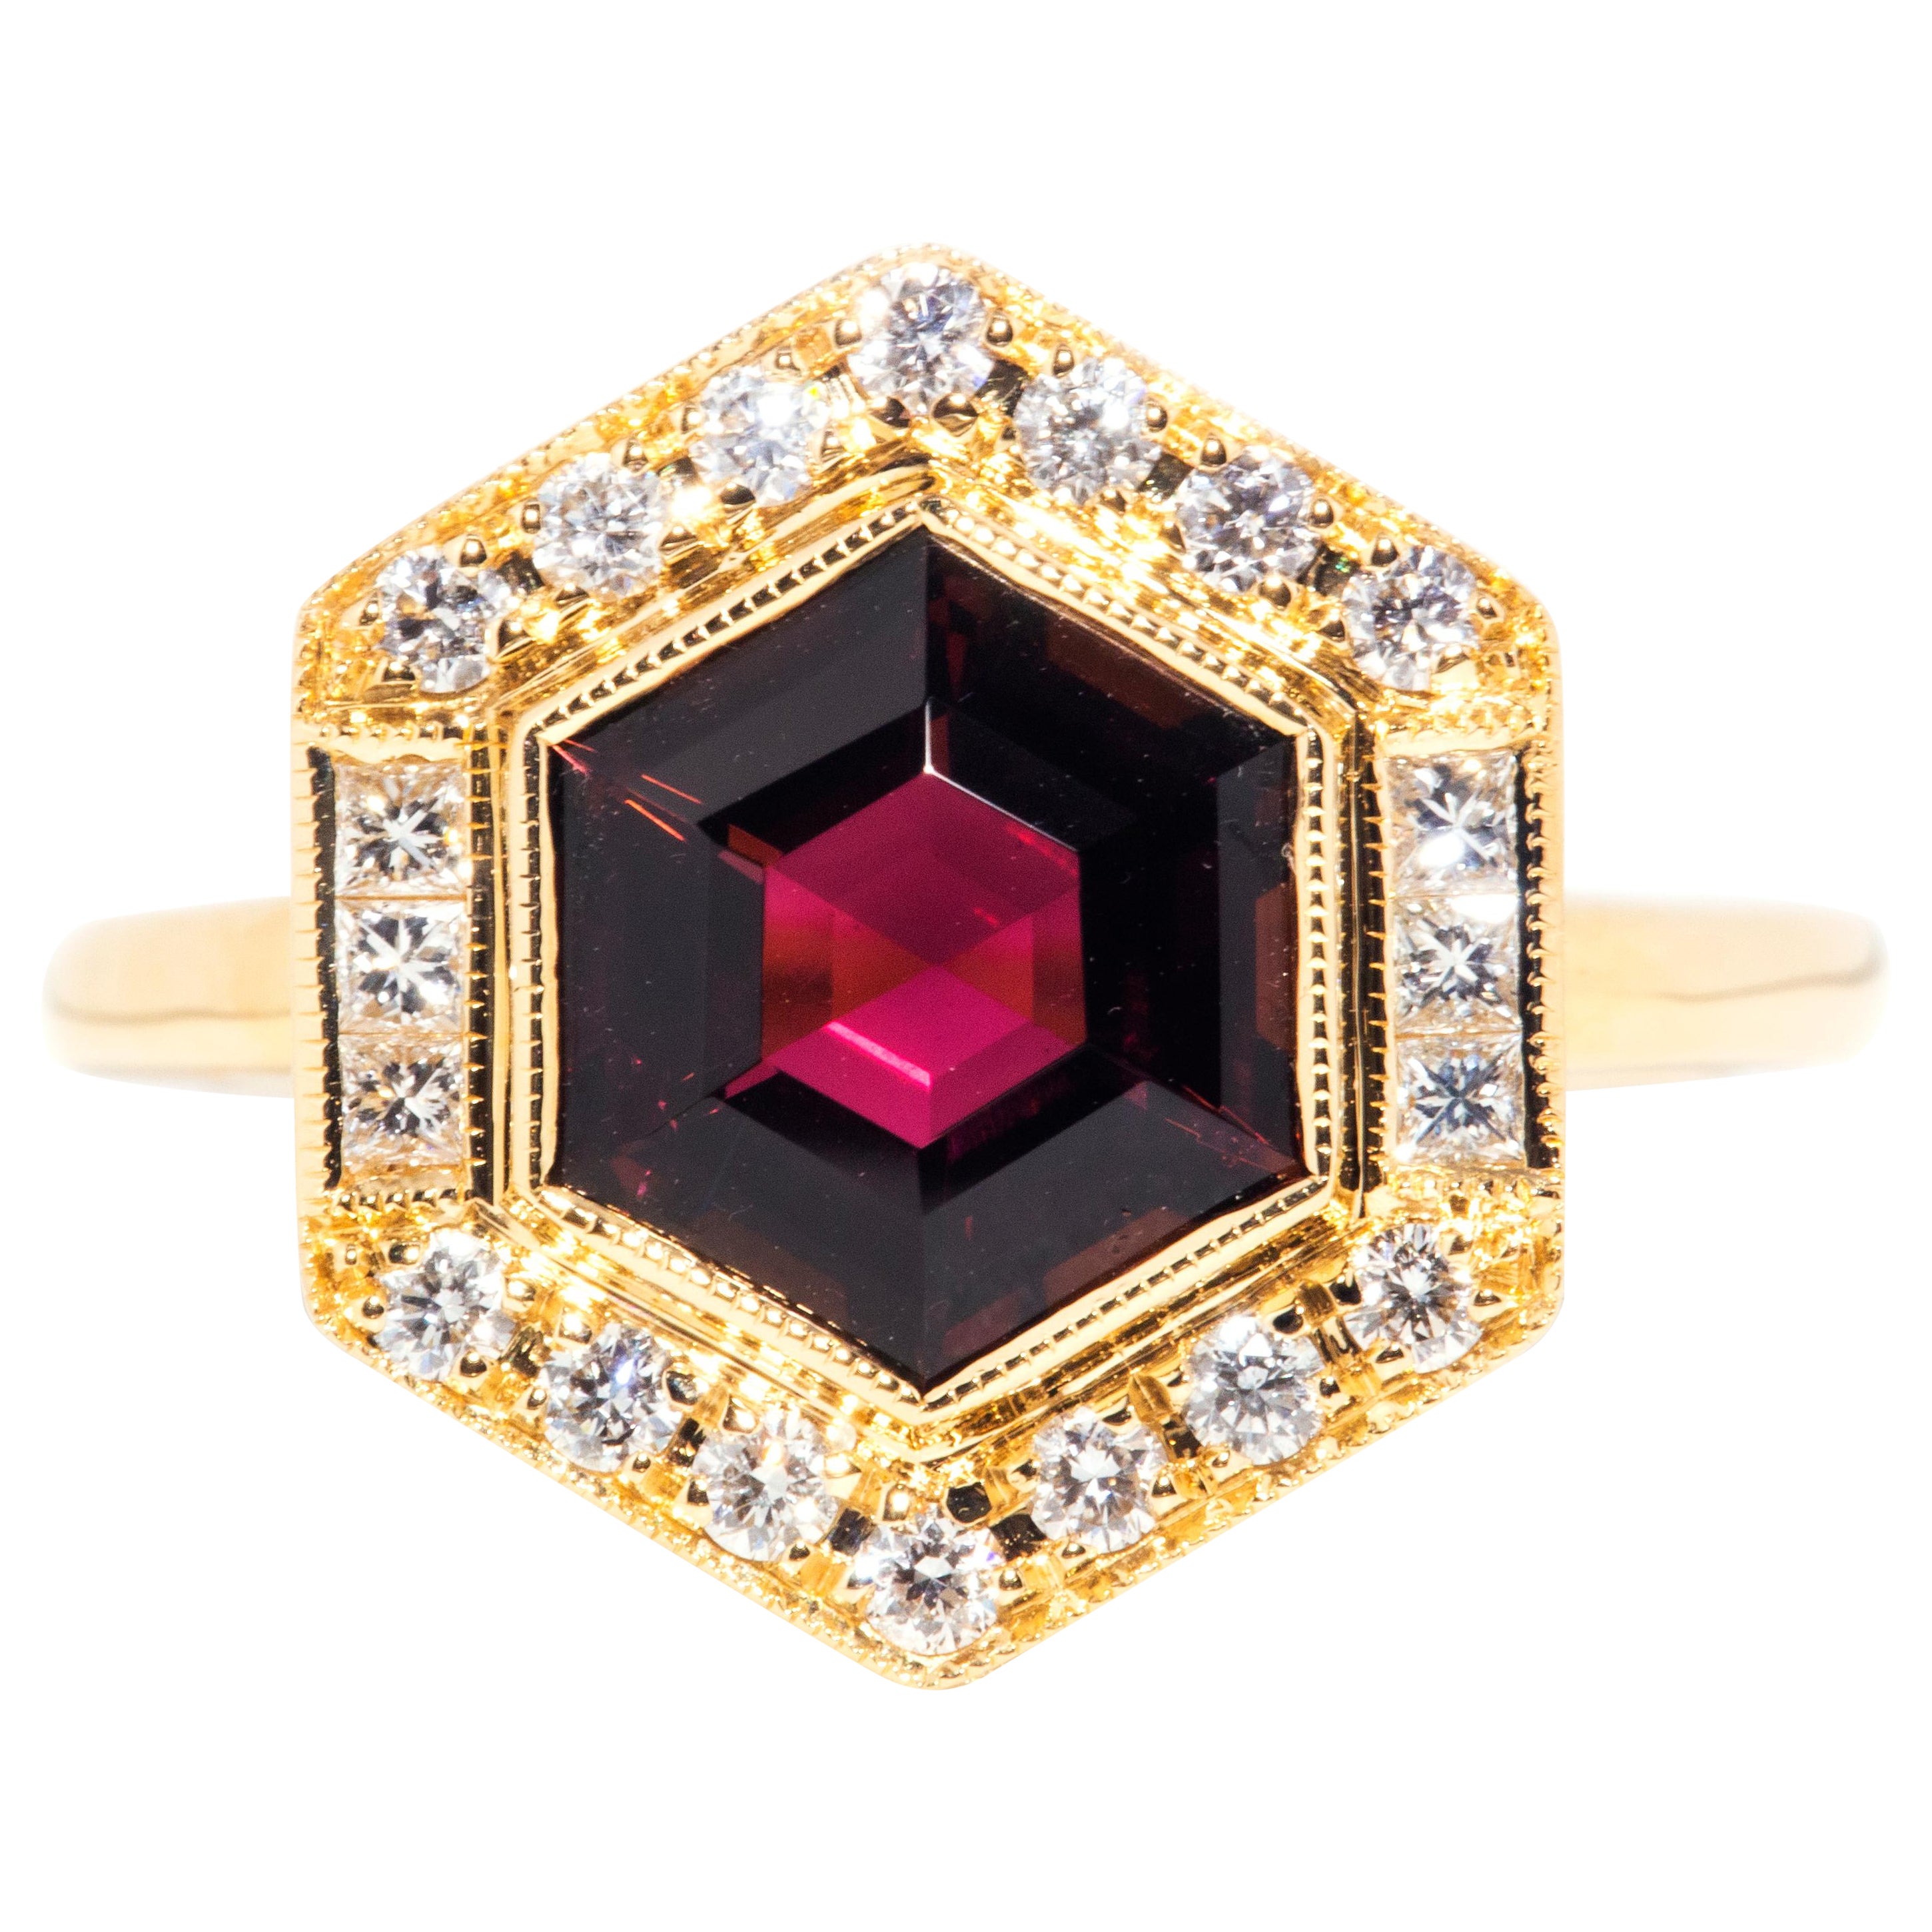 Contemporary 18 Carat Yellow Gold Reddish-Purple Tourmaline and Diamond Ring